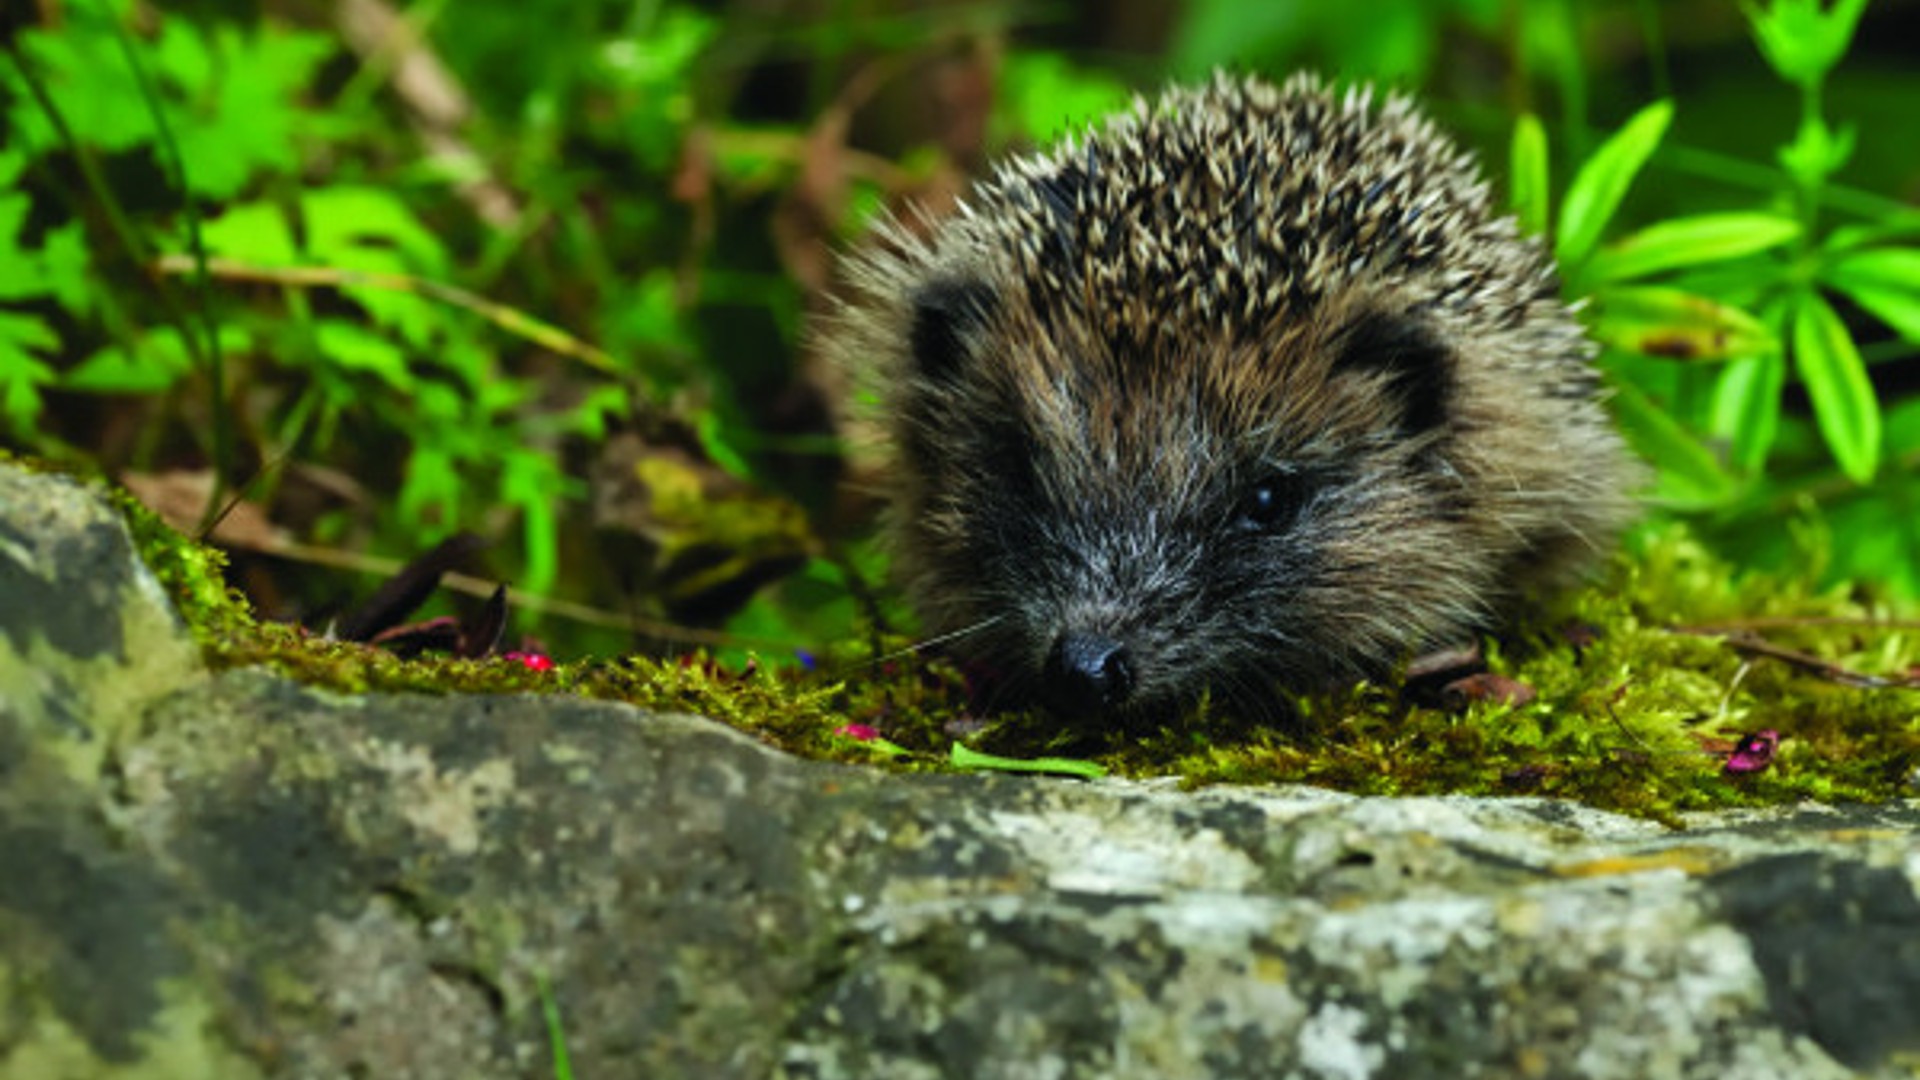 A wild hedgehog in the undergrowth